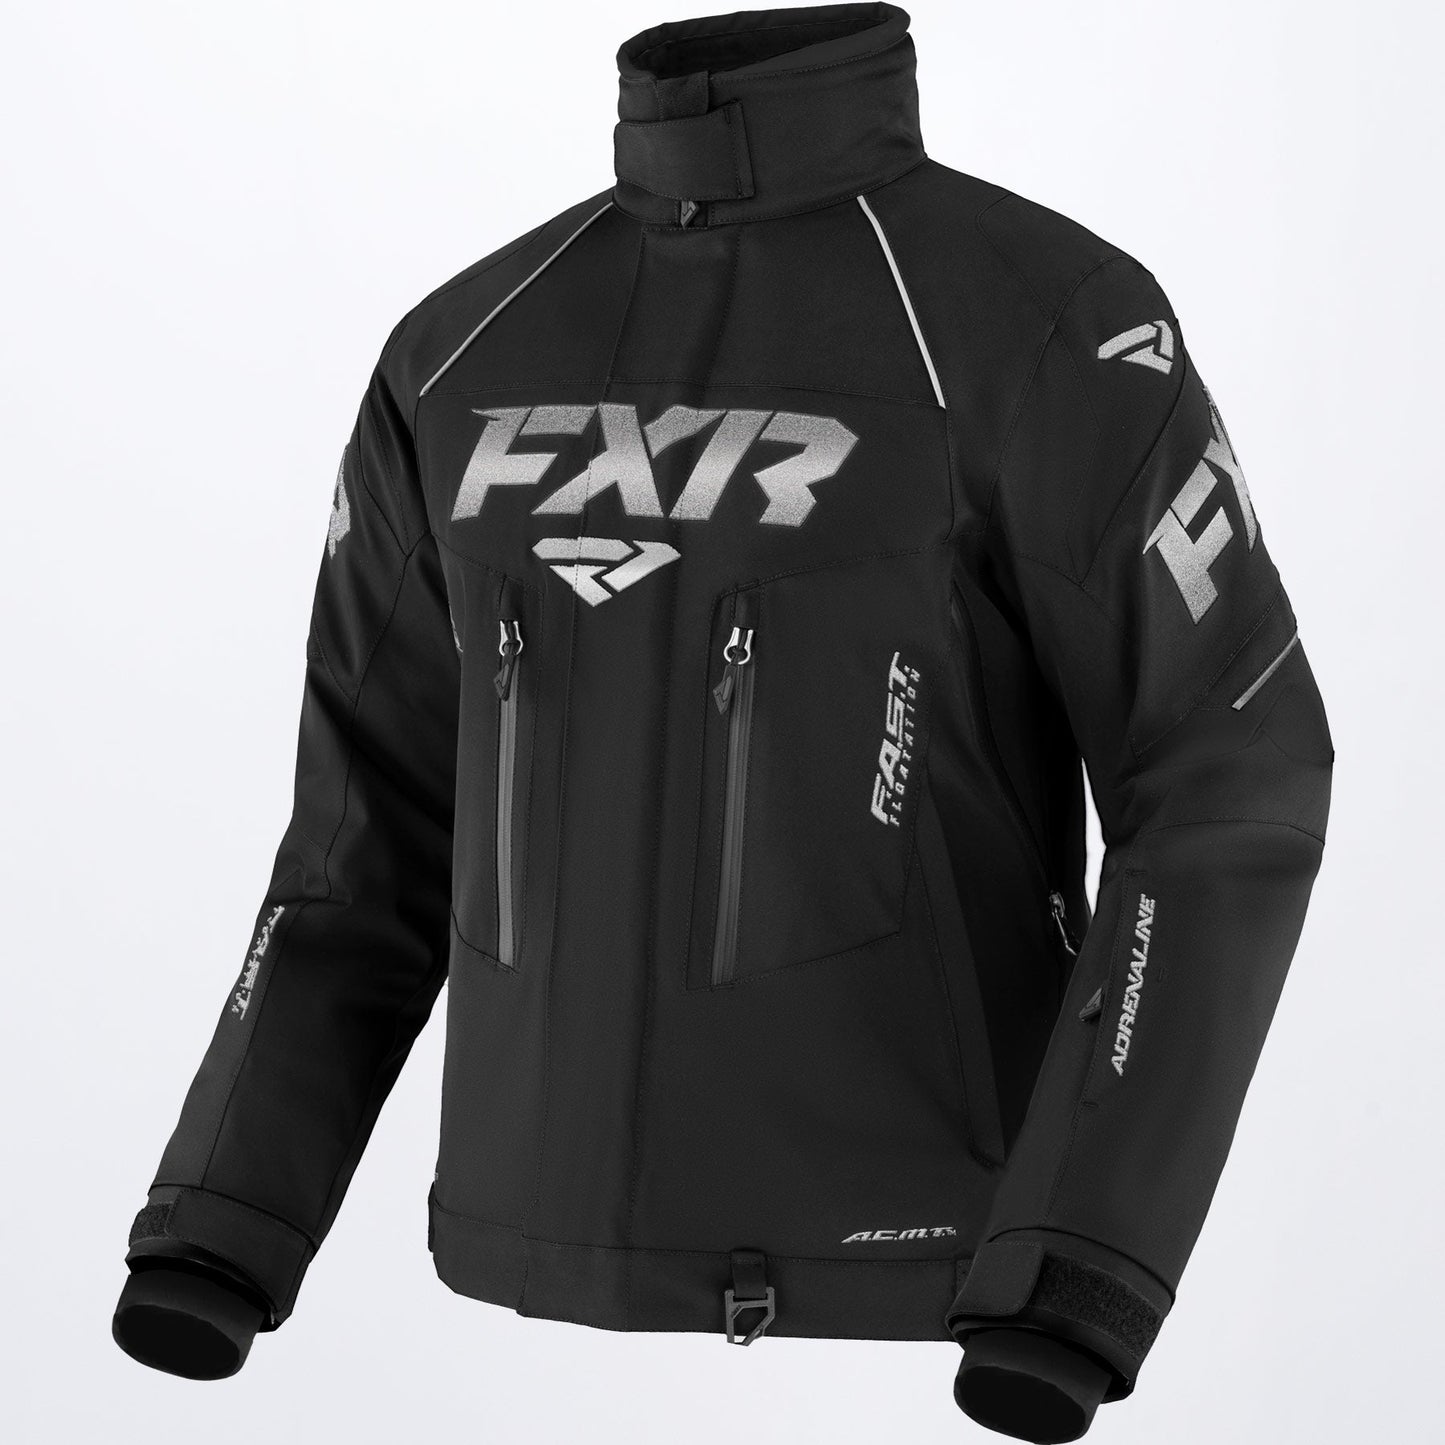 FXR Women's Adrenaline Jacket